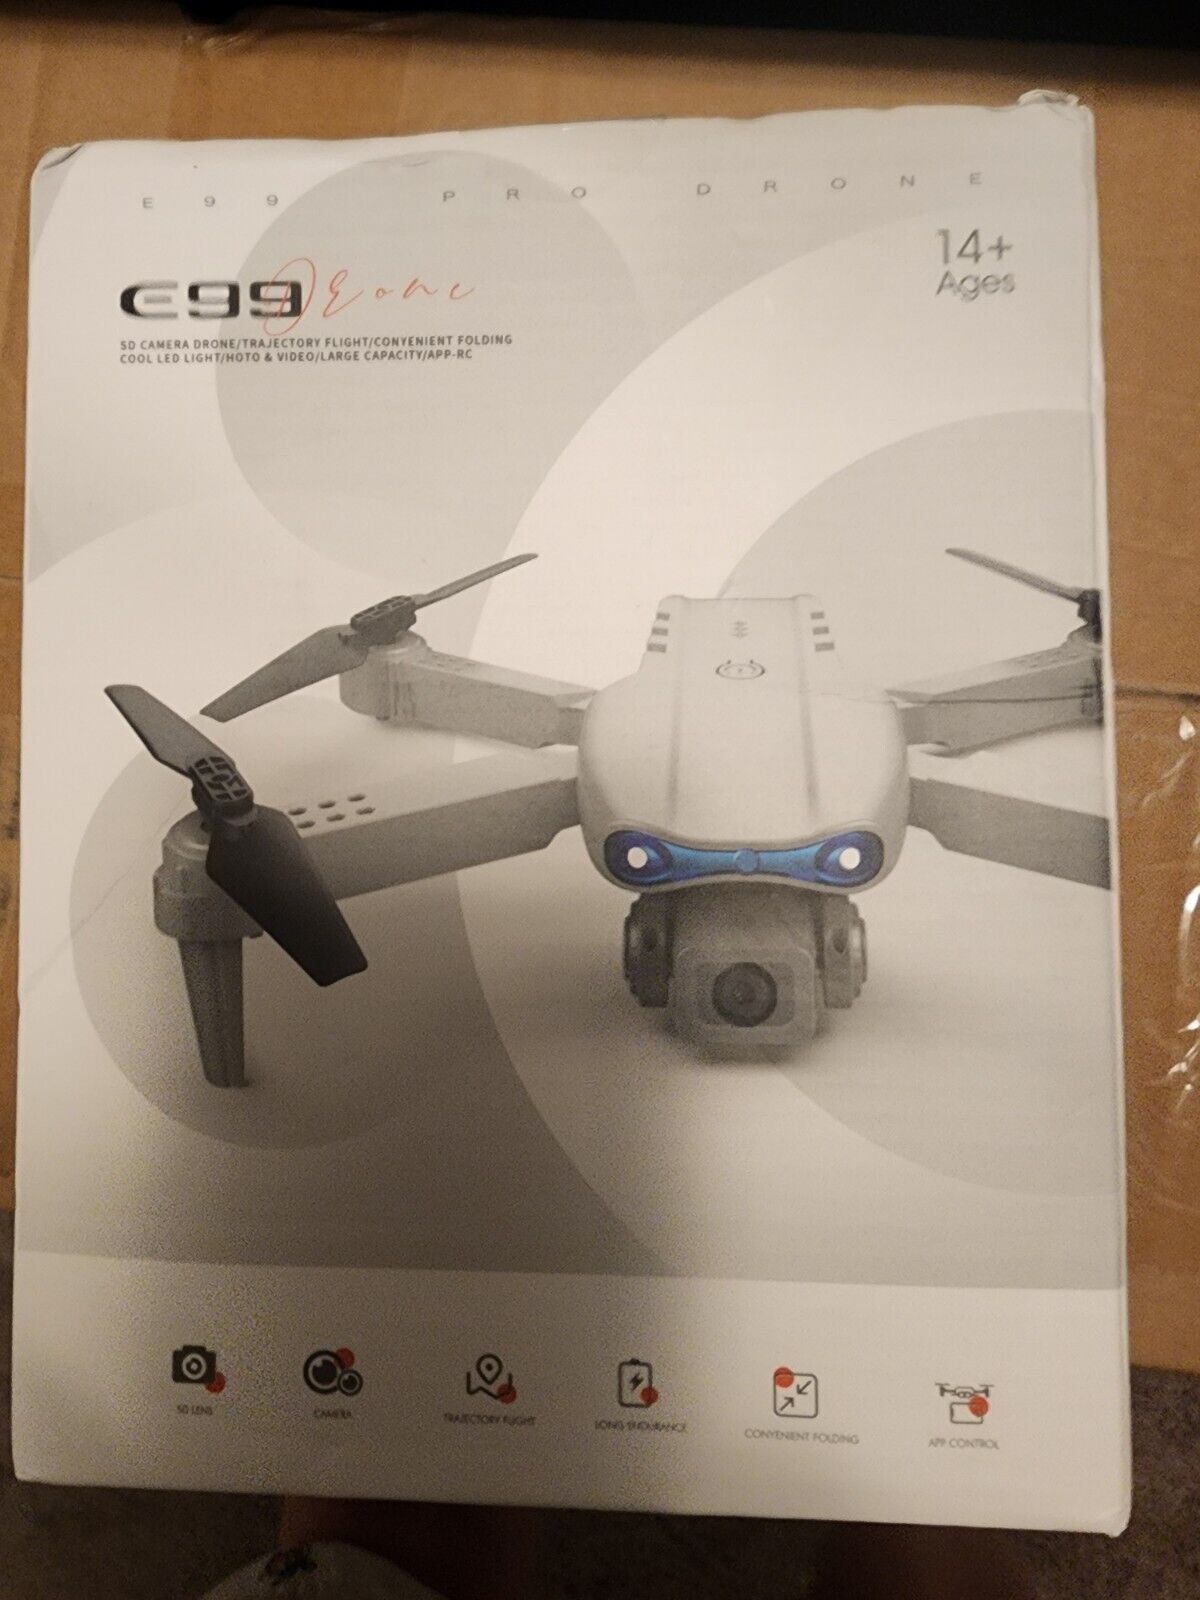 E99 drone with camera. Foldable RC Drone